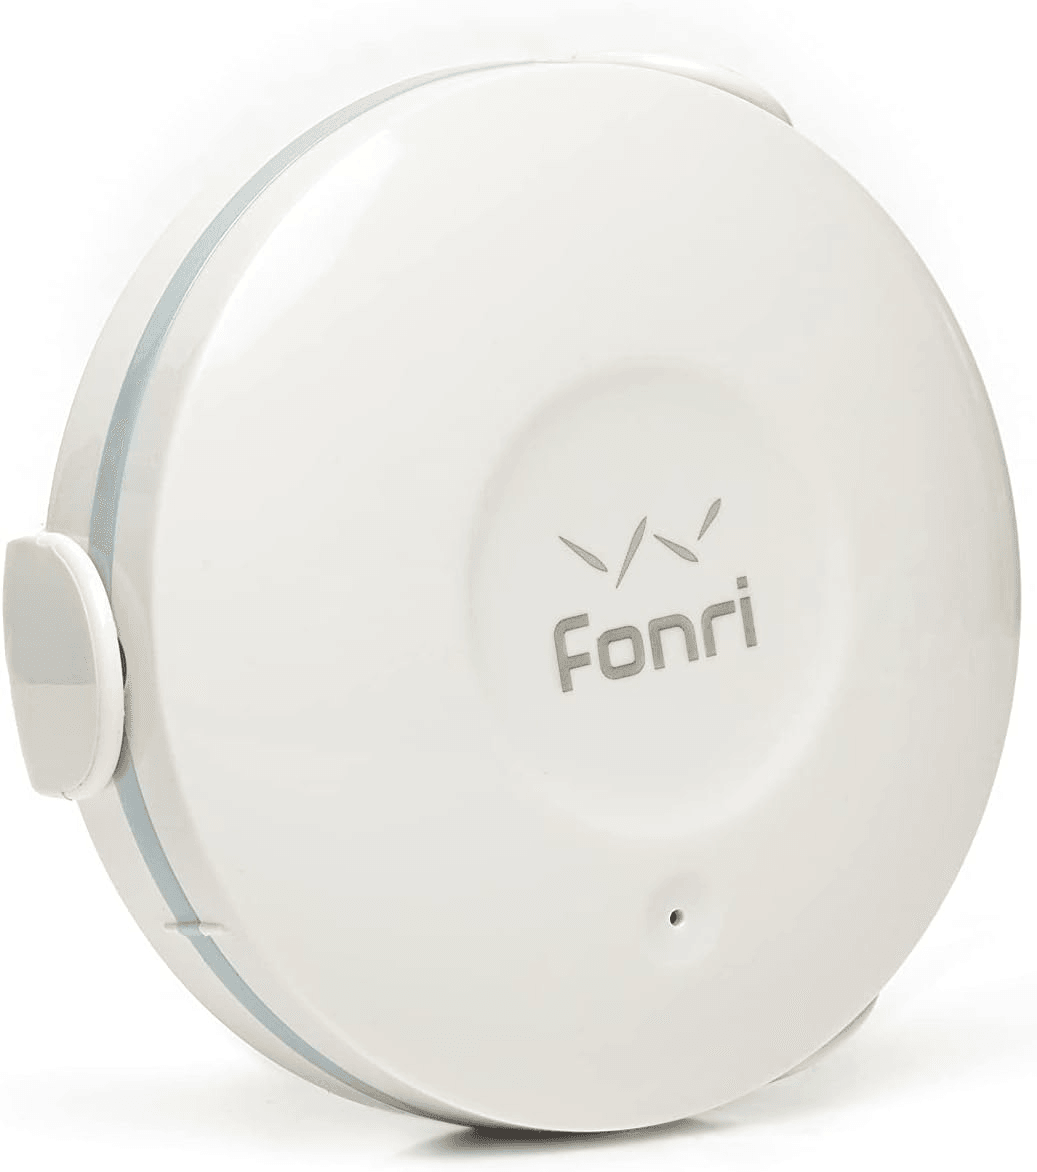 Fonri Wi-Fi Akıllı Su Baskın Sensörü